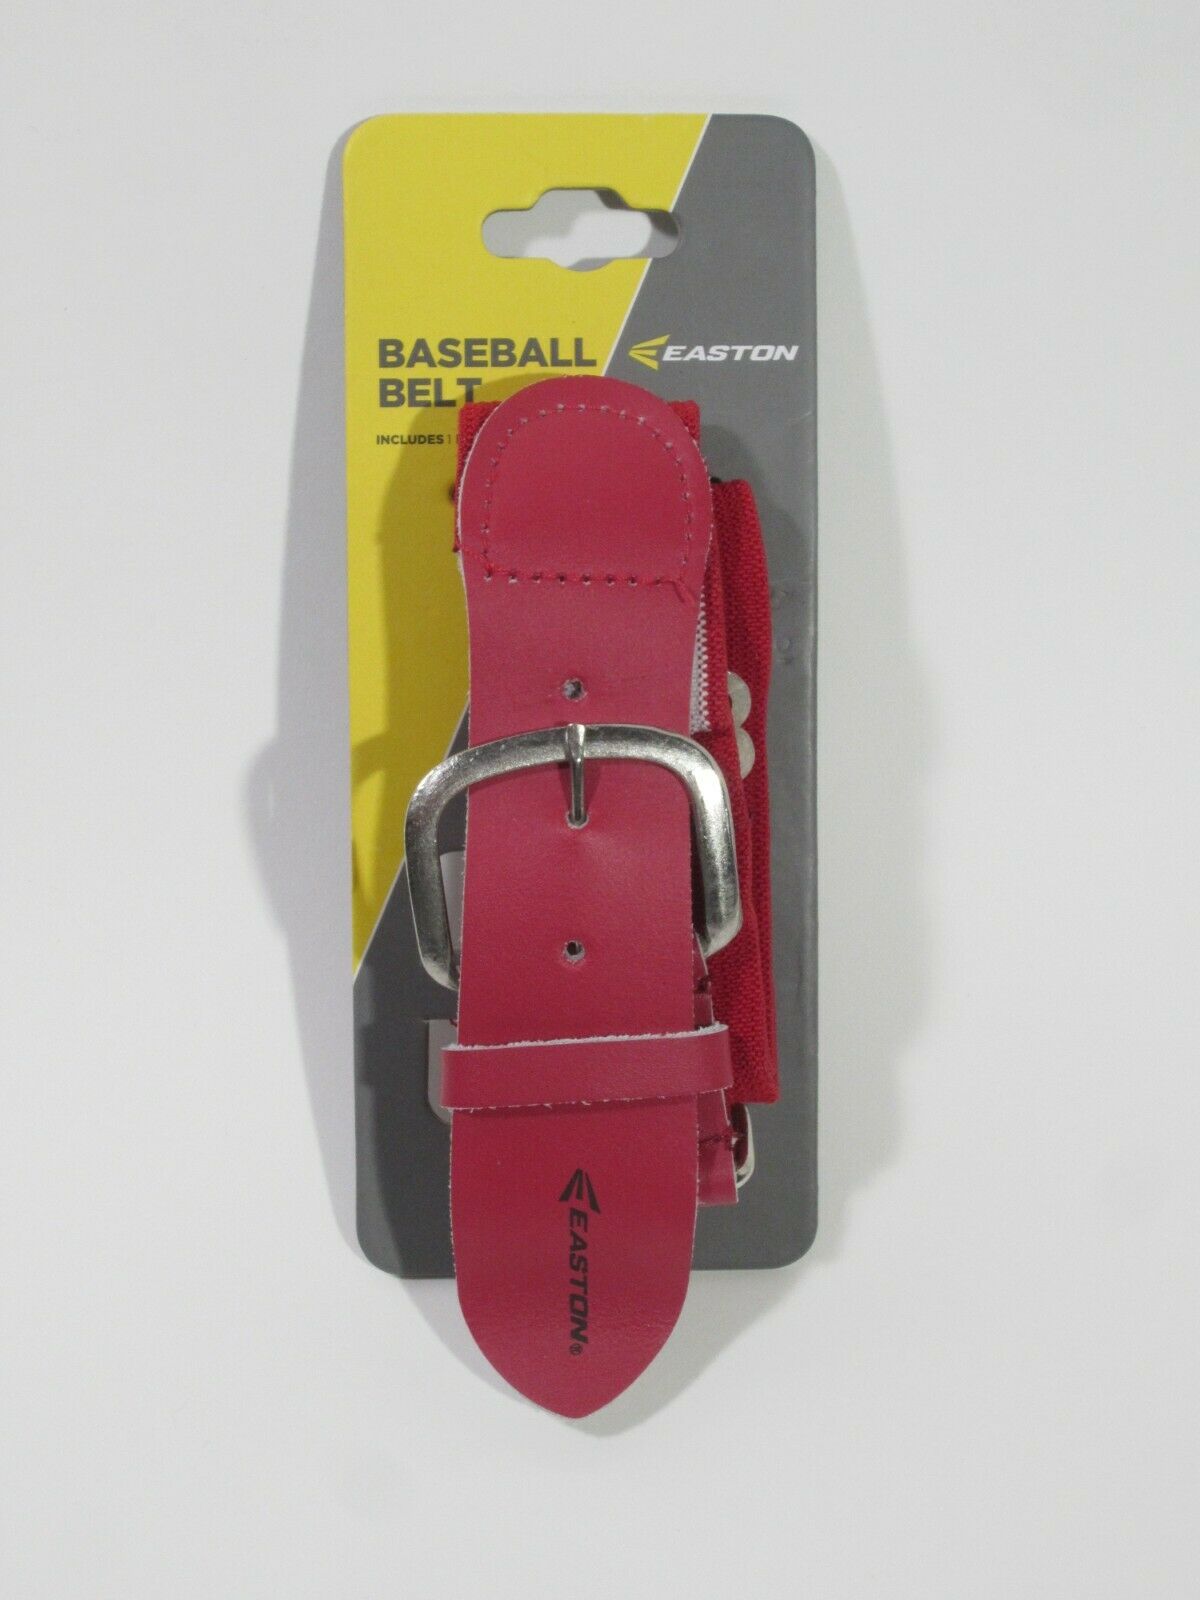 NEW Easton Baseball Belt - Adjustable Elastic - Youth Size - Little League - RED